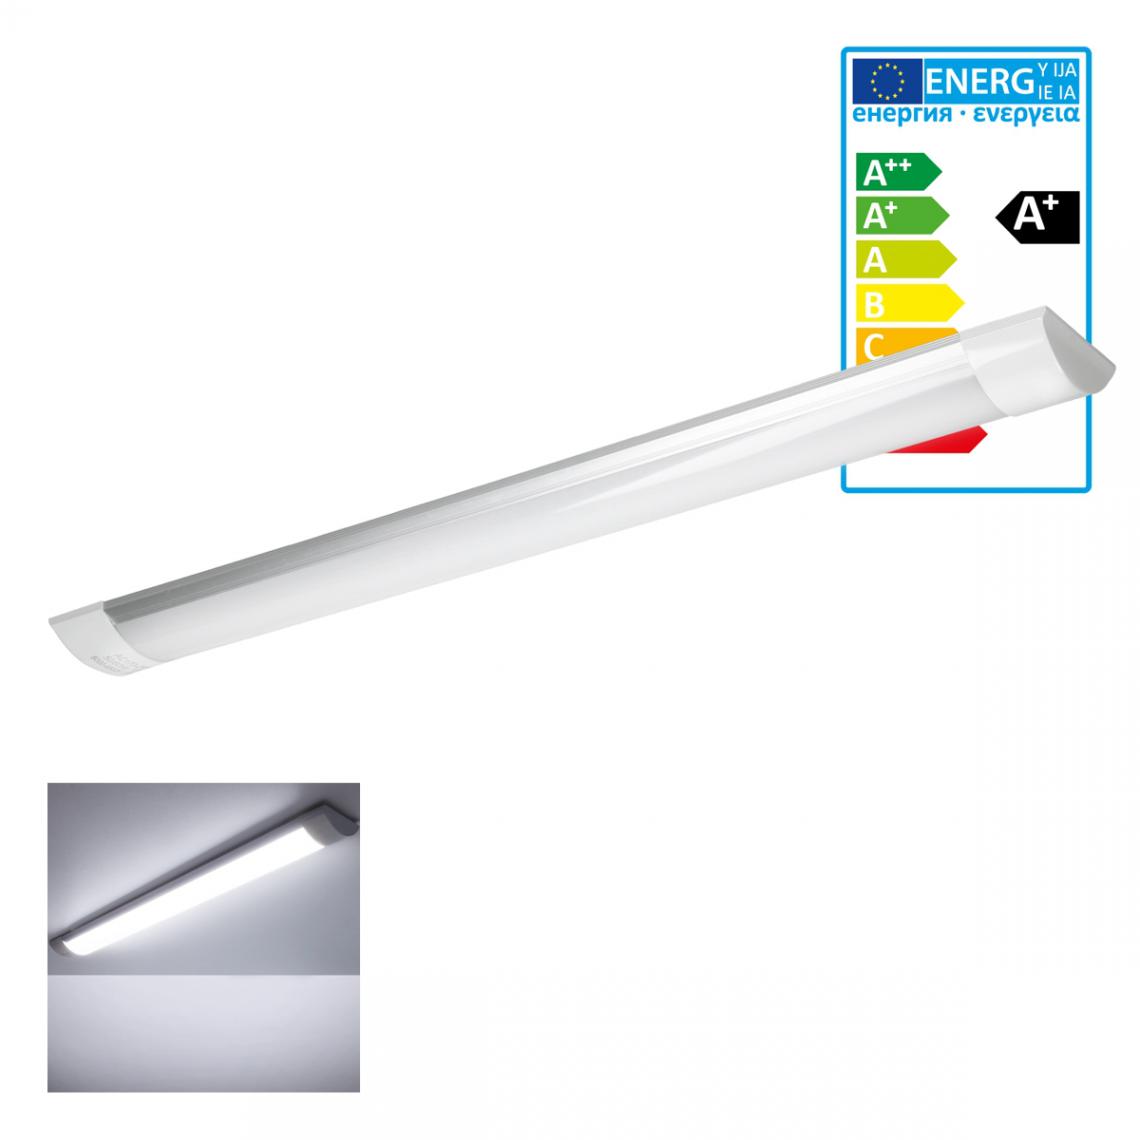 Ecd Germany - Set 6x LED batten tube plafond 18W 60cm blanc froid 220-240V en aluminium - Tubes et néons